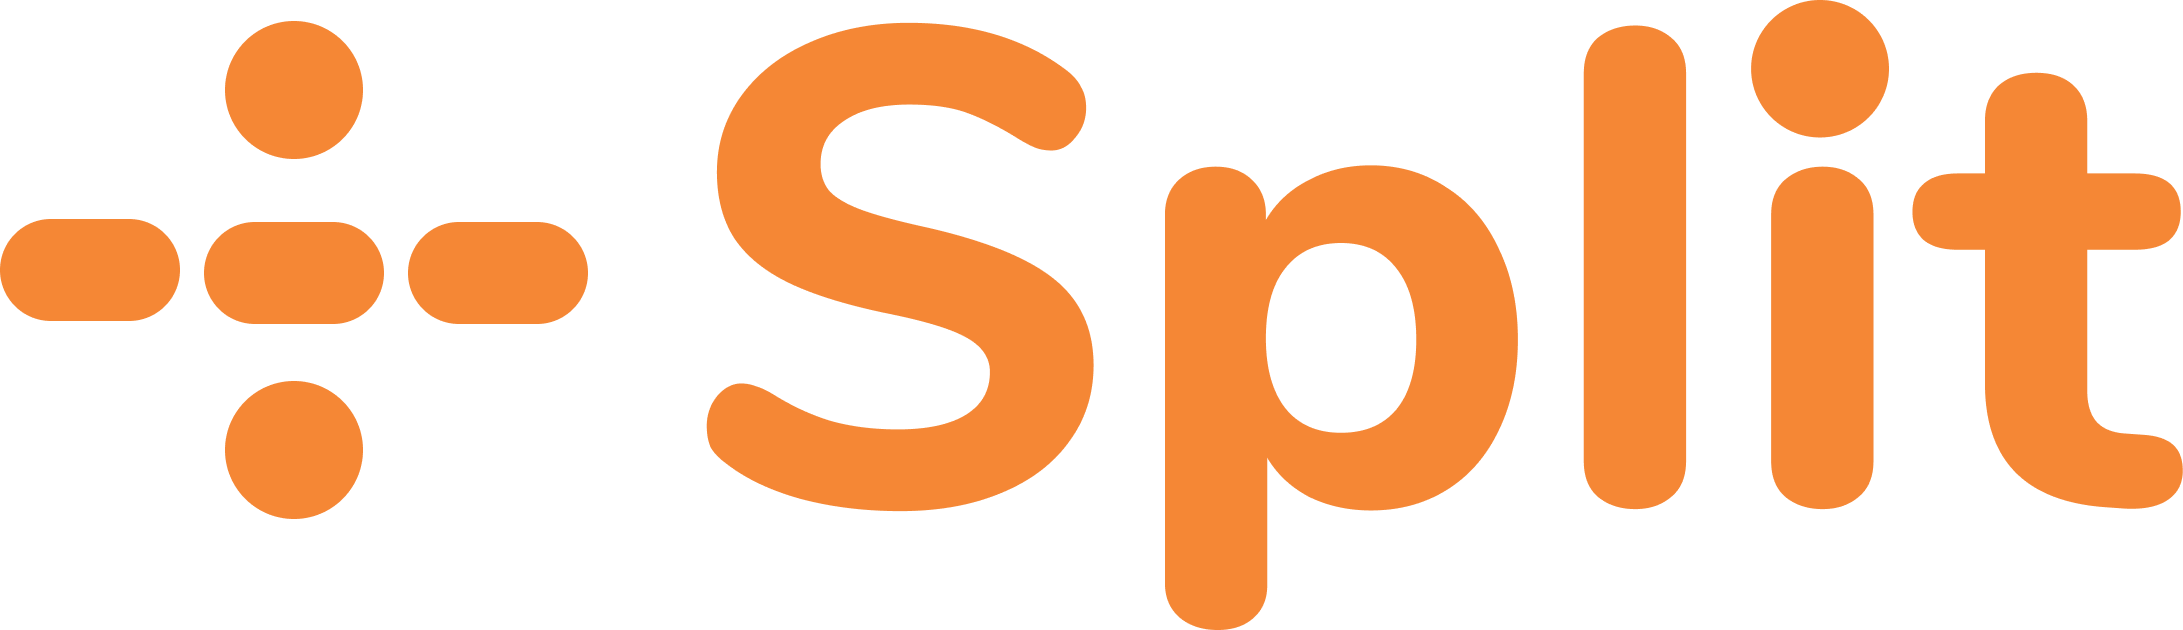 mono_orage_split_logo